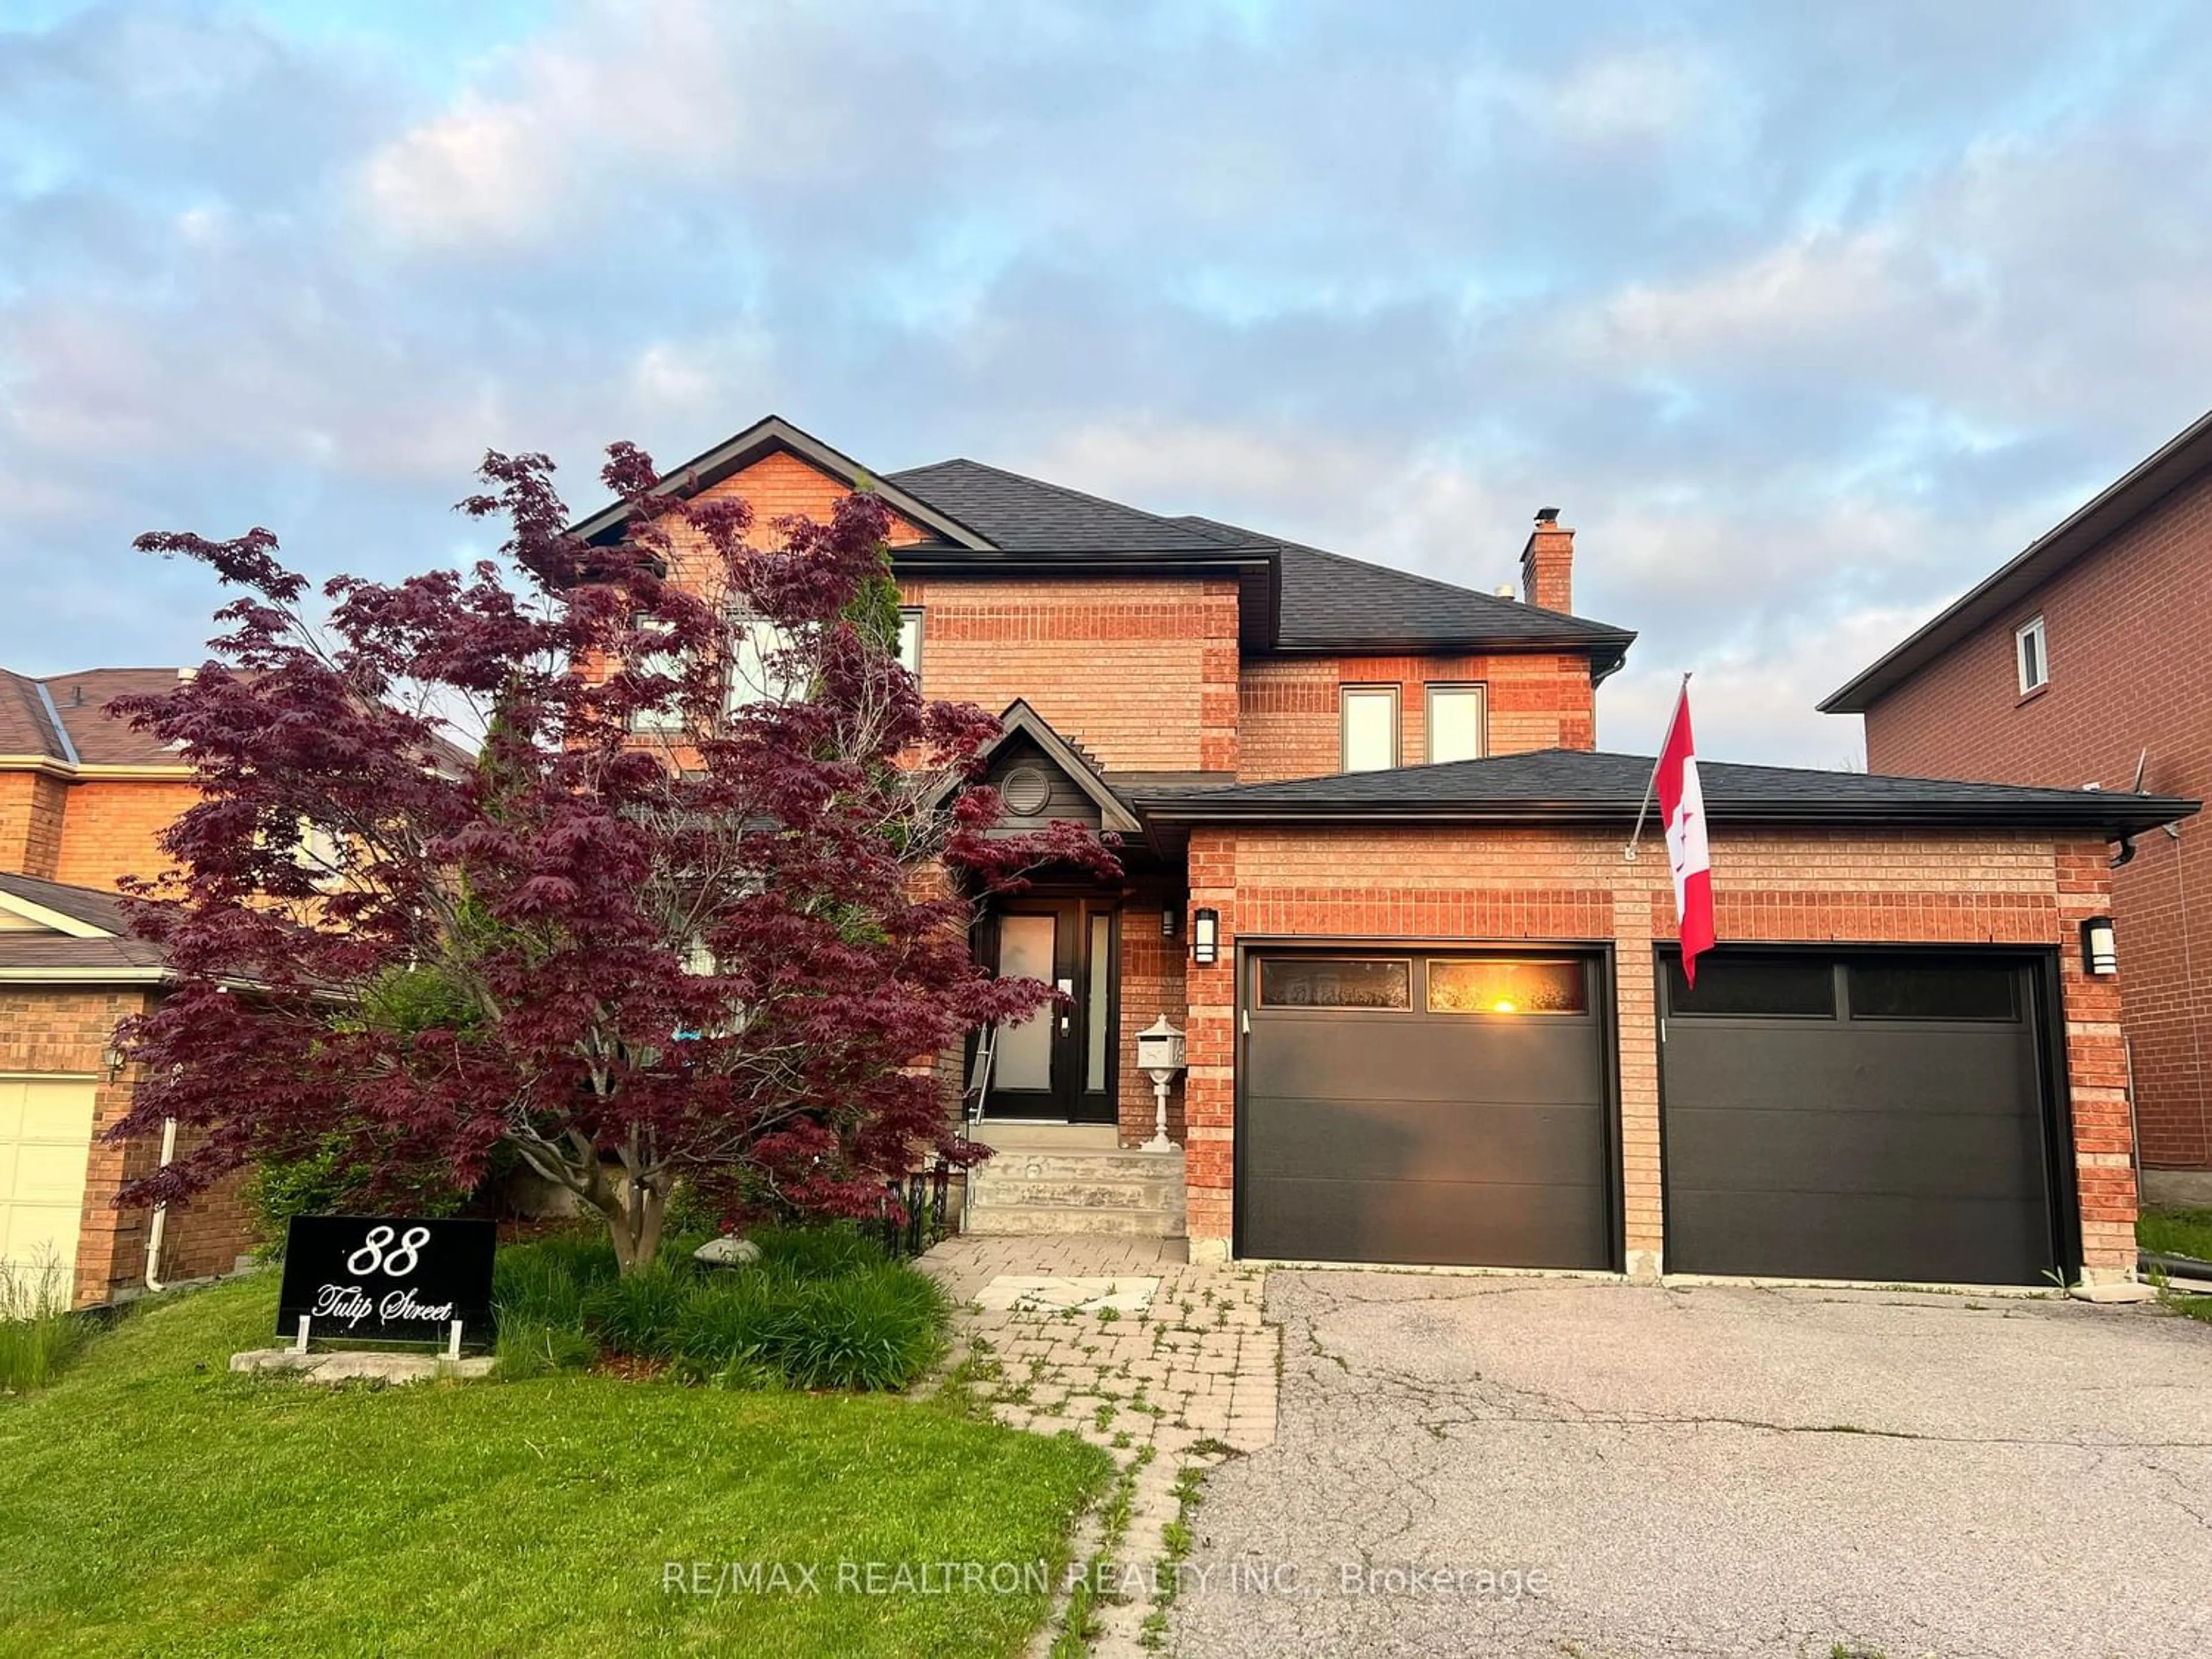 Home with brick exterior material for 88 Tulip St, Georgina Ontario L4P 1C7